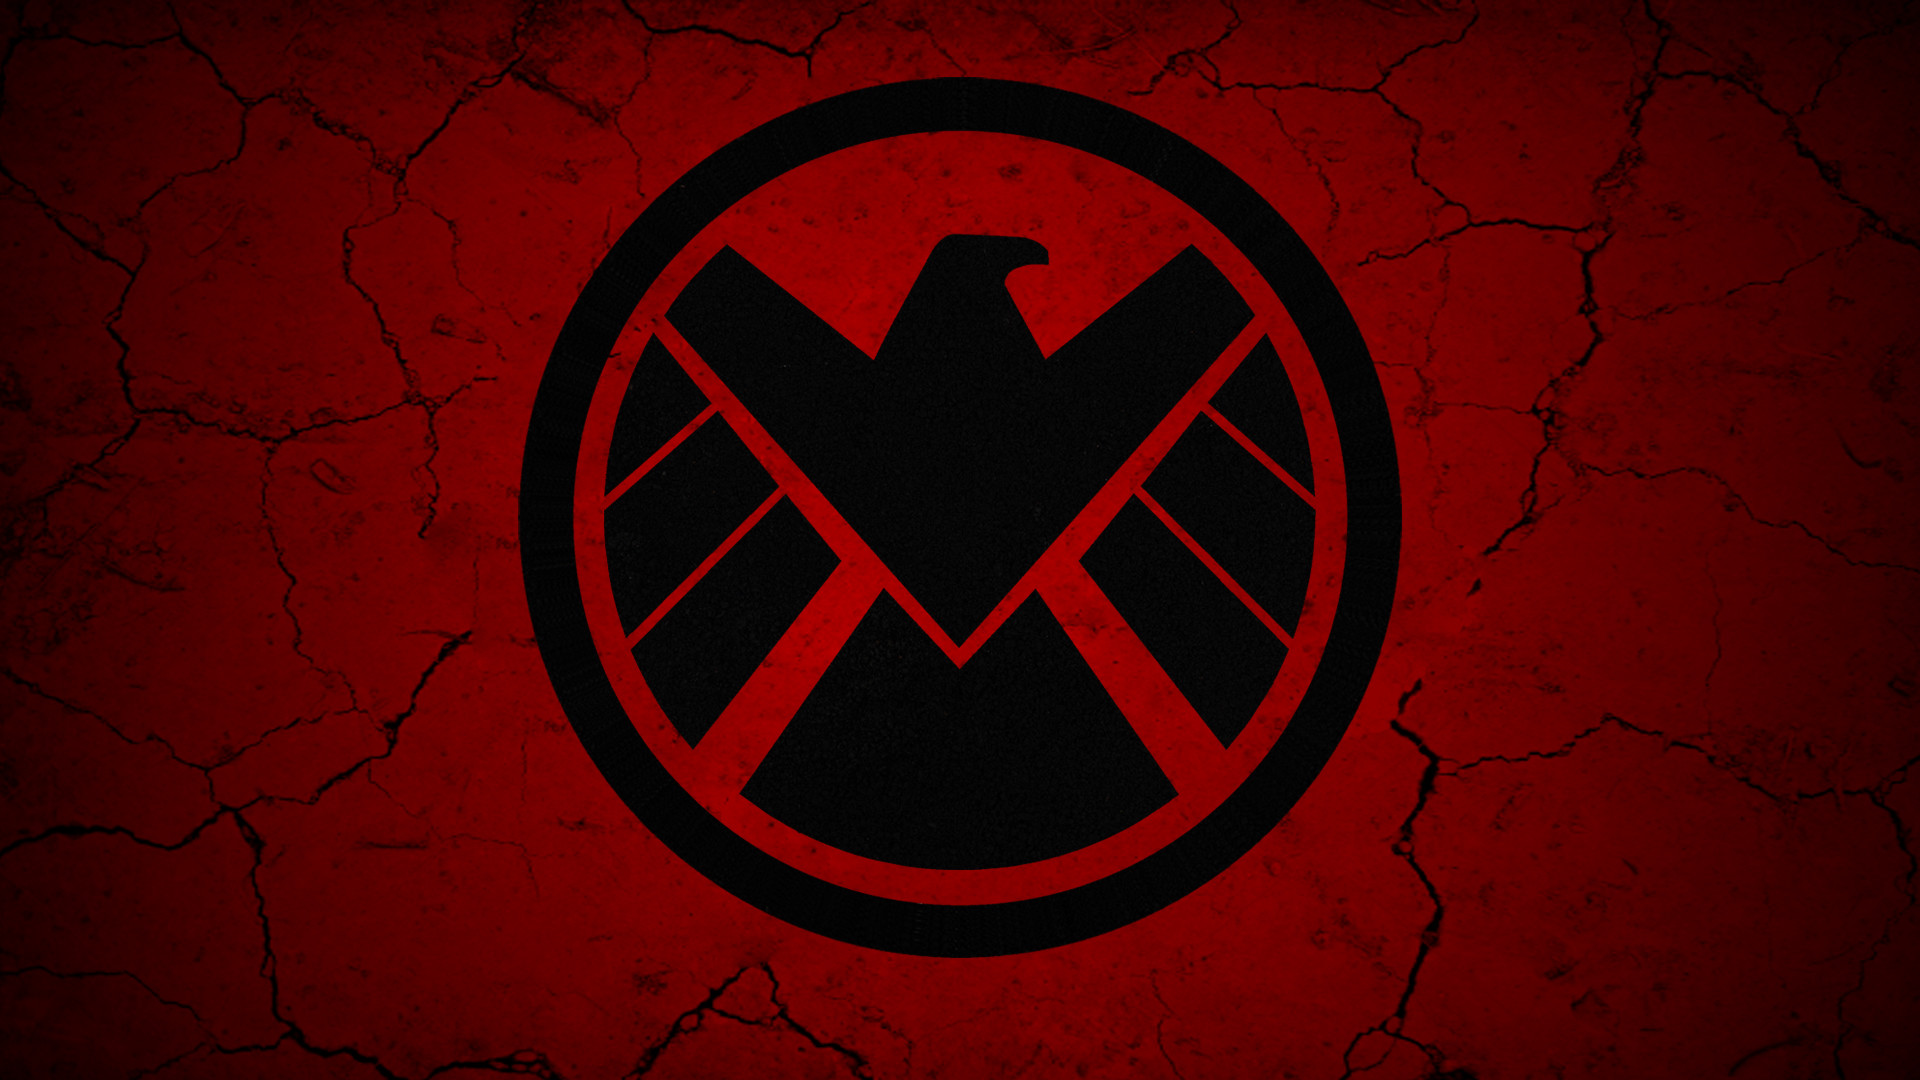 the shield wallpaper,red,maroon,logo,symbol,emblem